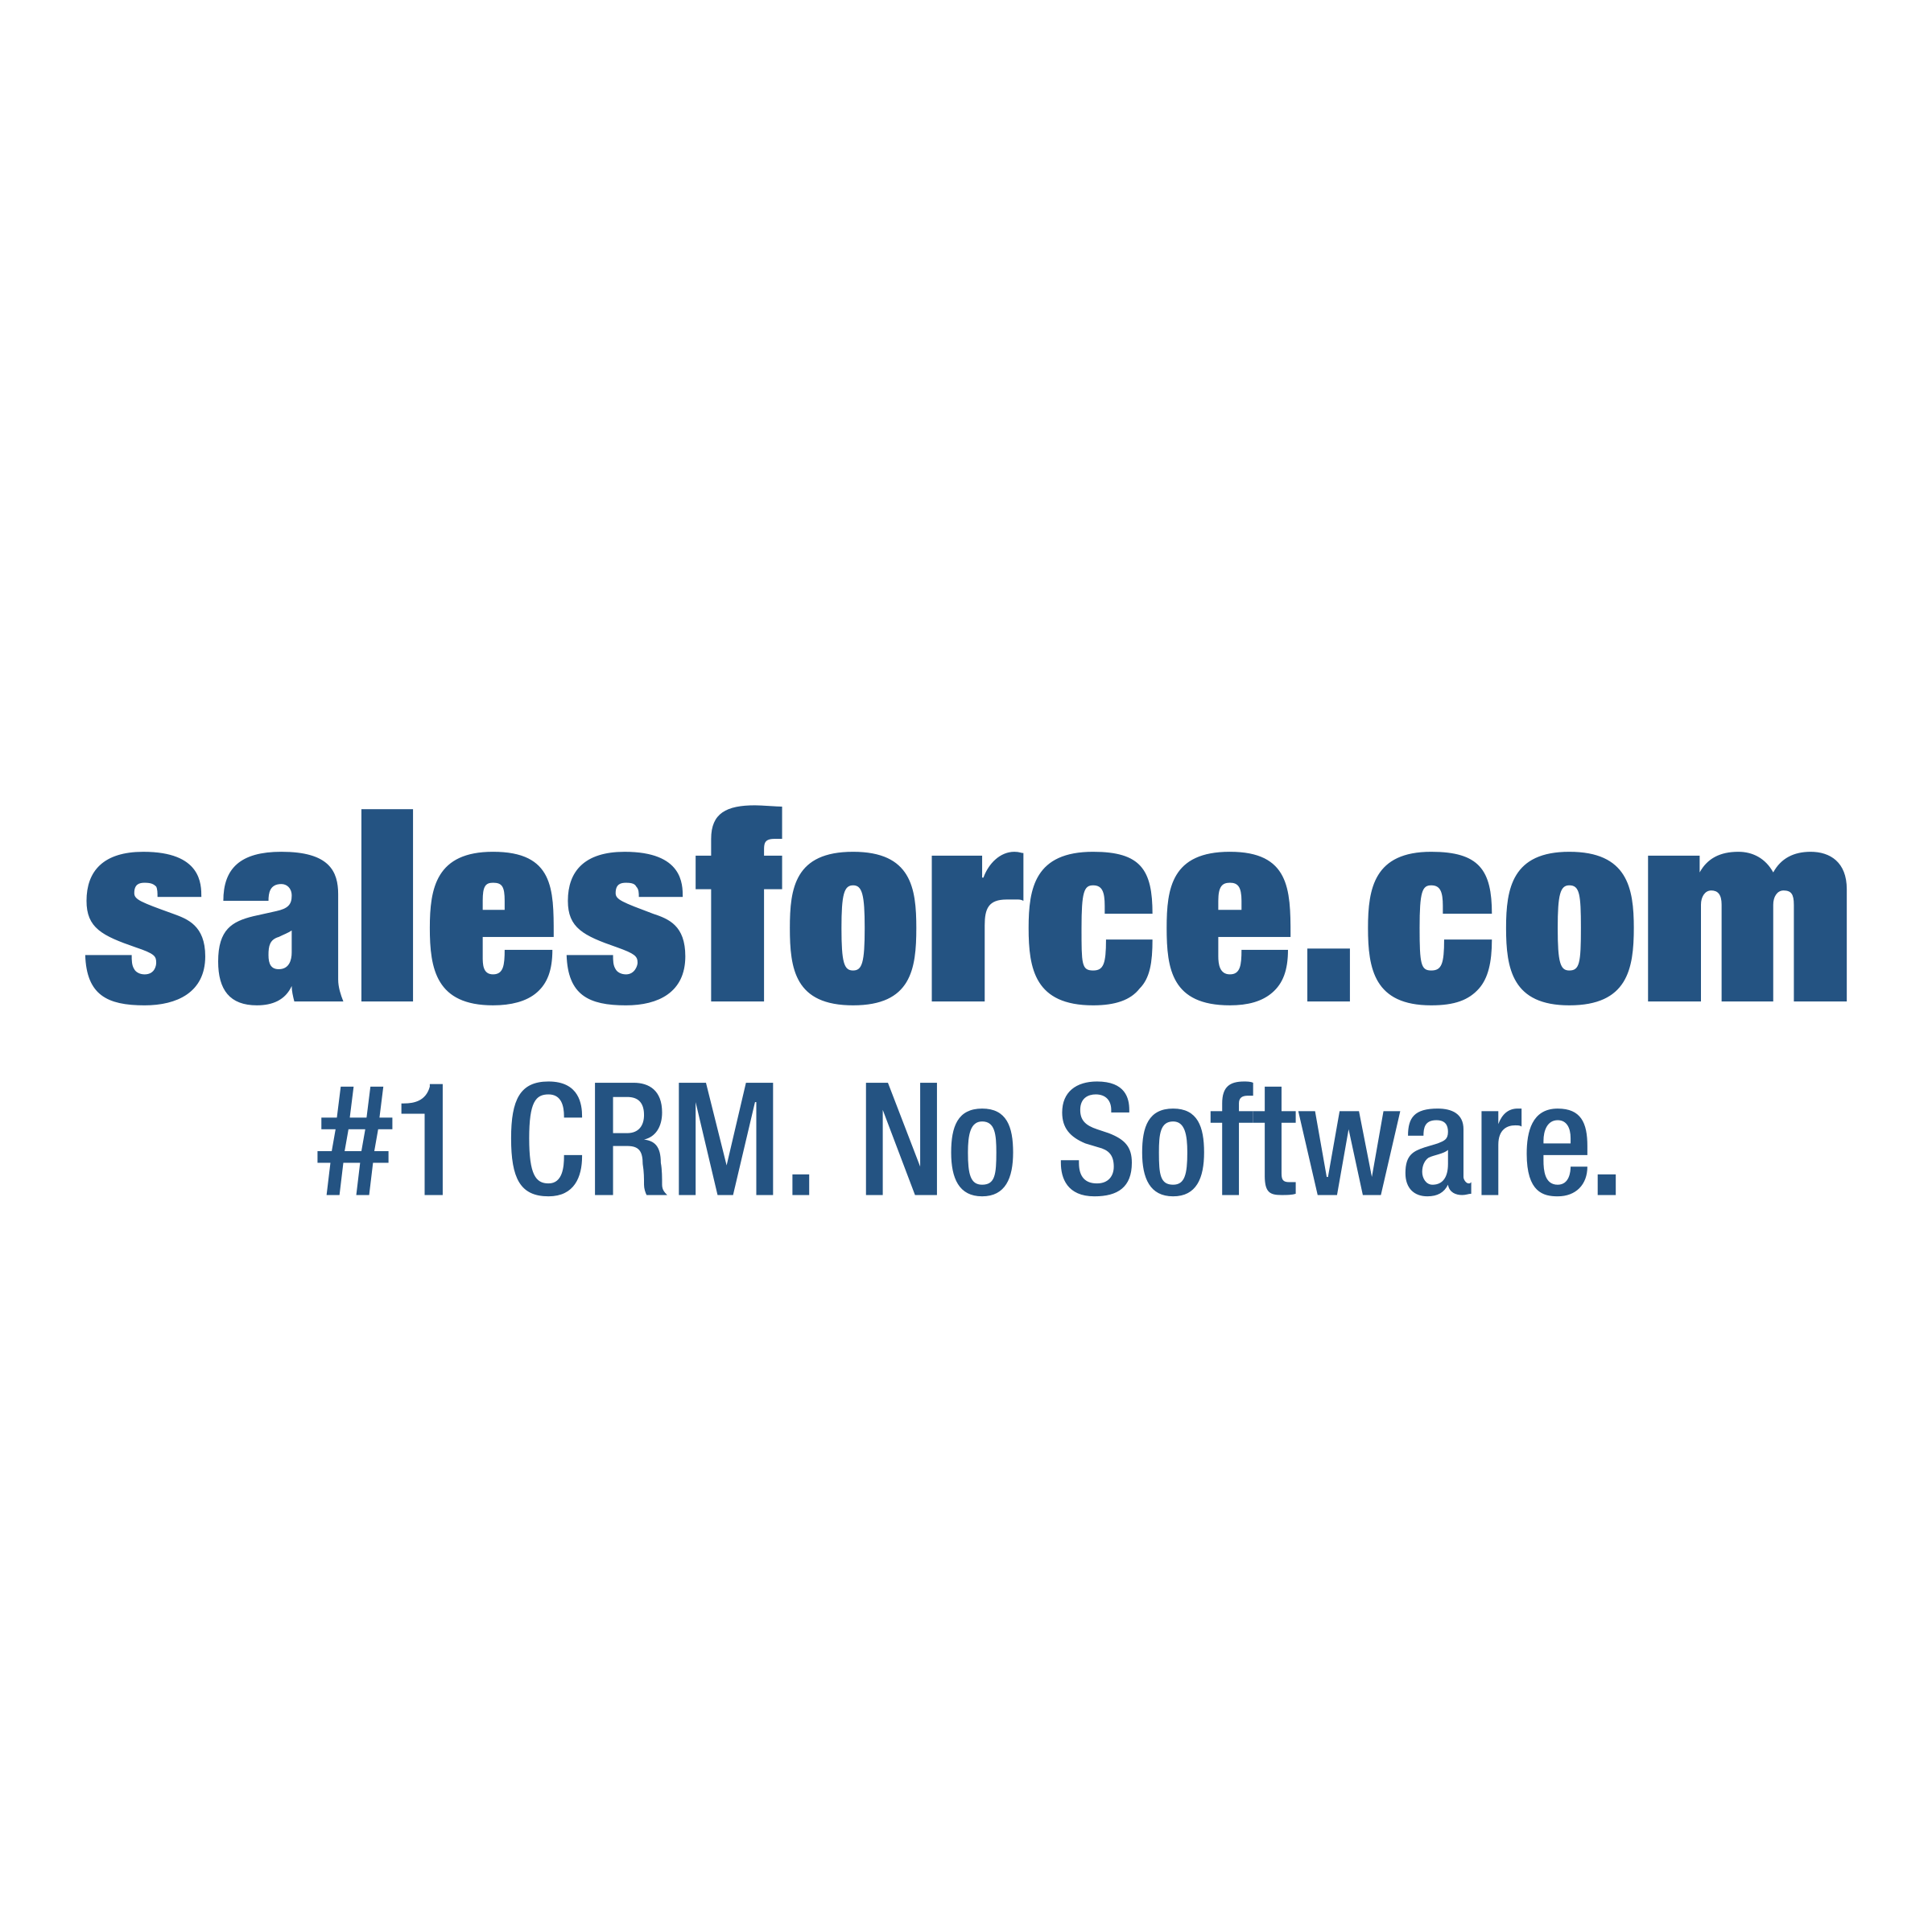 Salesforce.com Logo - salesforce com Logo PNG Transparent & SVG Vector - Freebie Supply